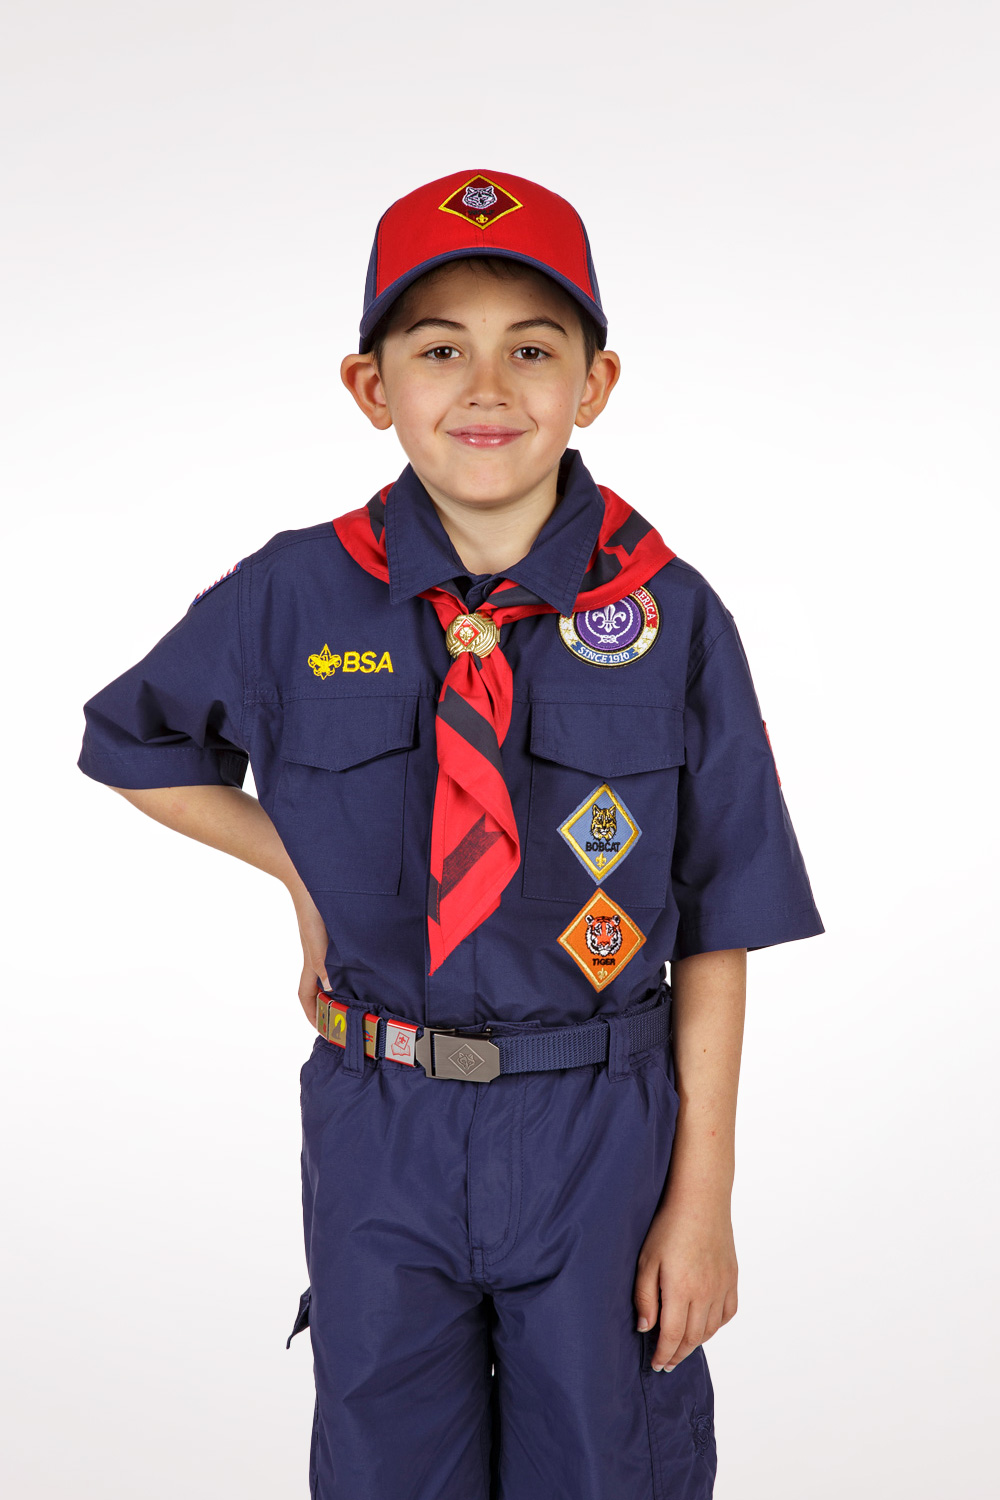 Pin on Kansas City Scouts Uniforms/Logos